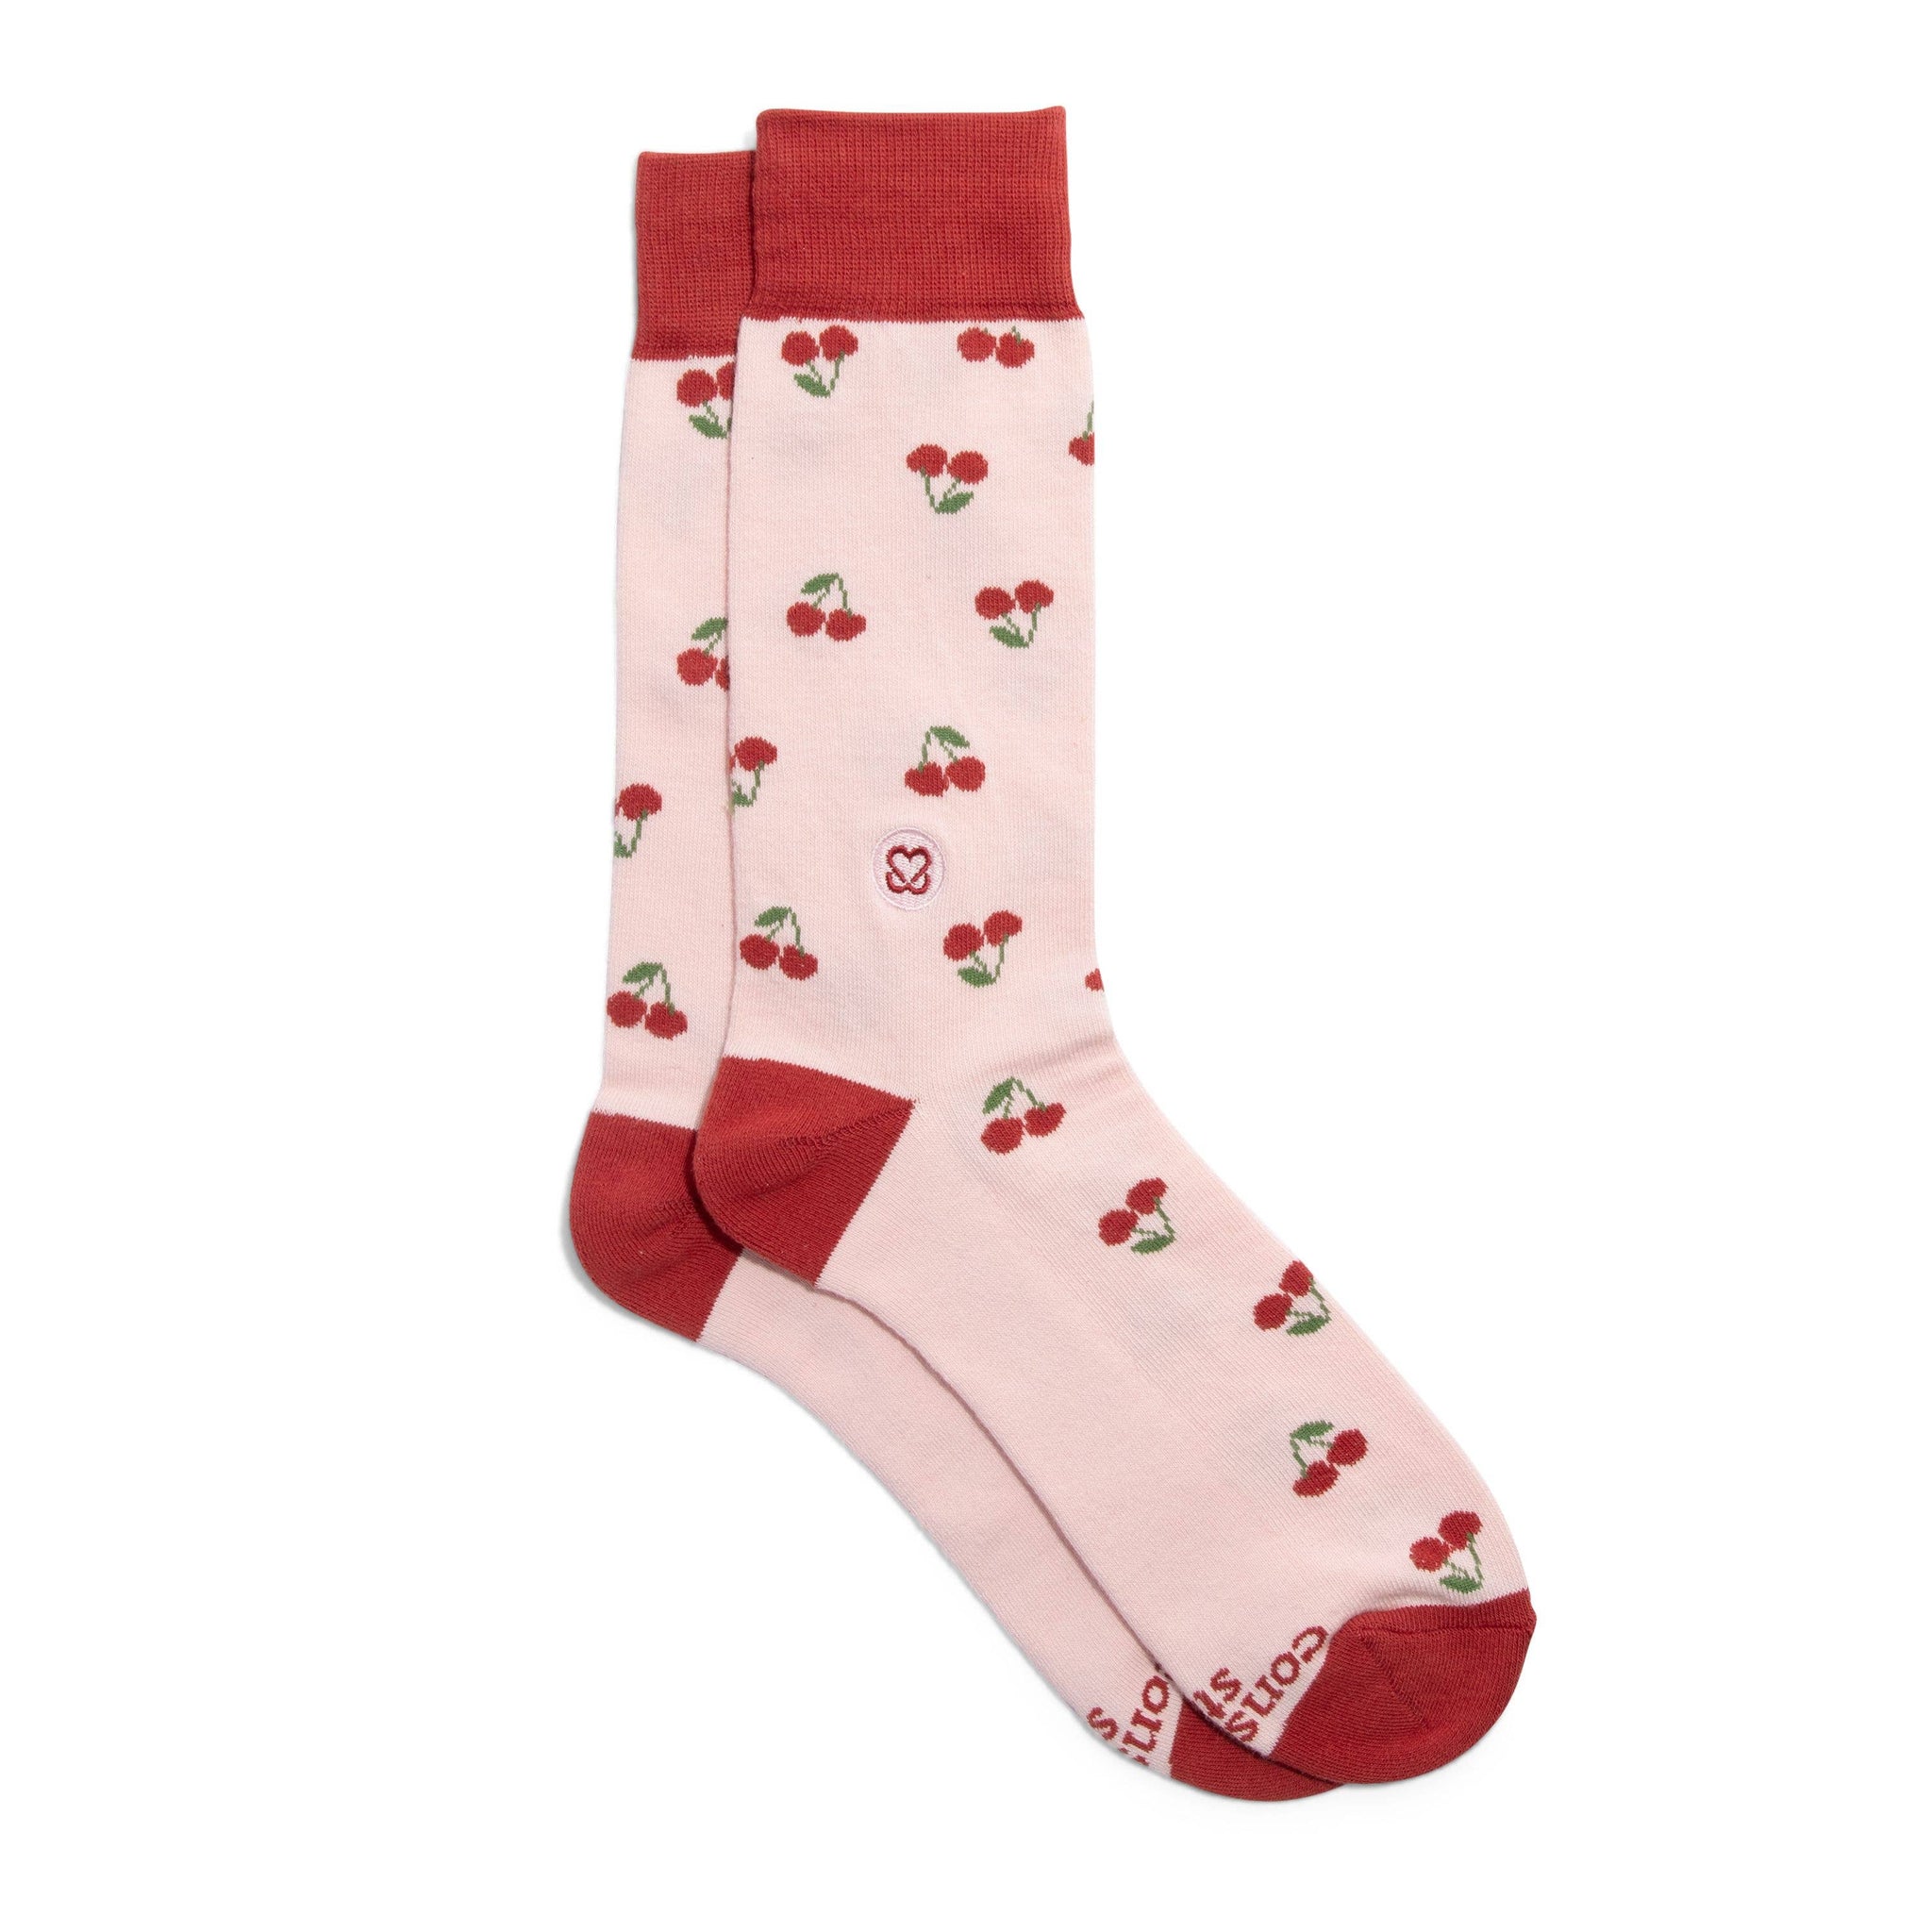 Socks that support self-checks cherry pattern (Small)